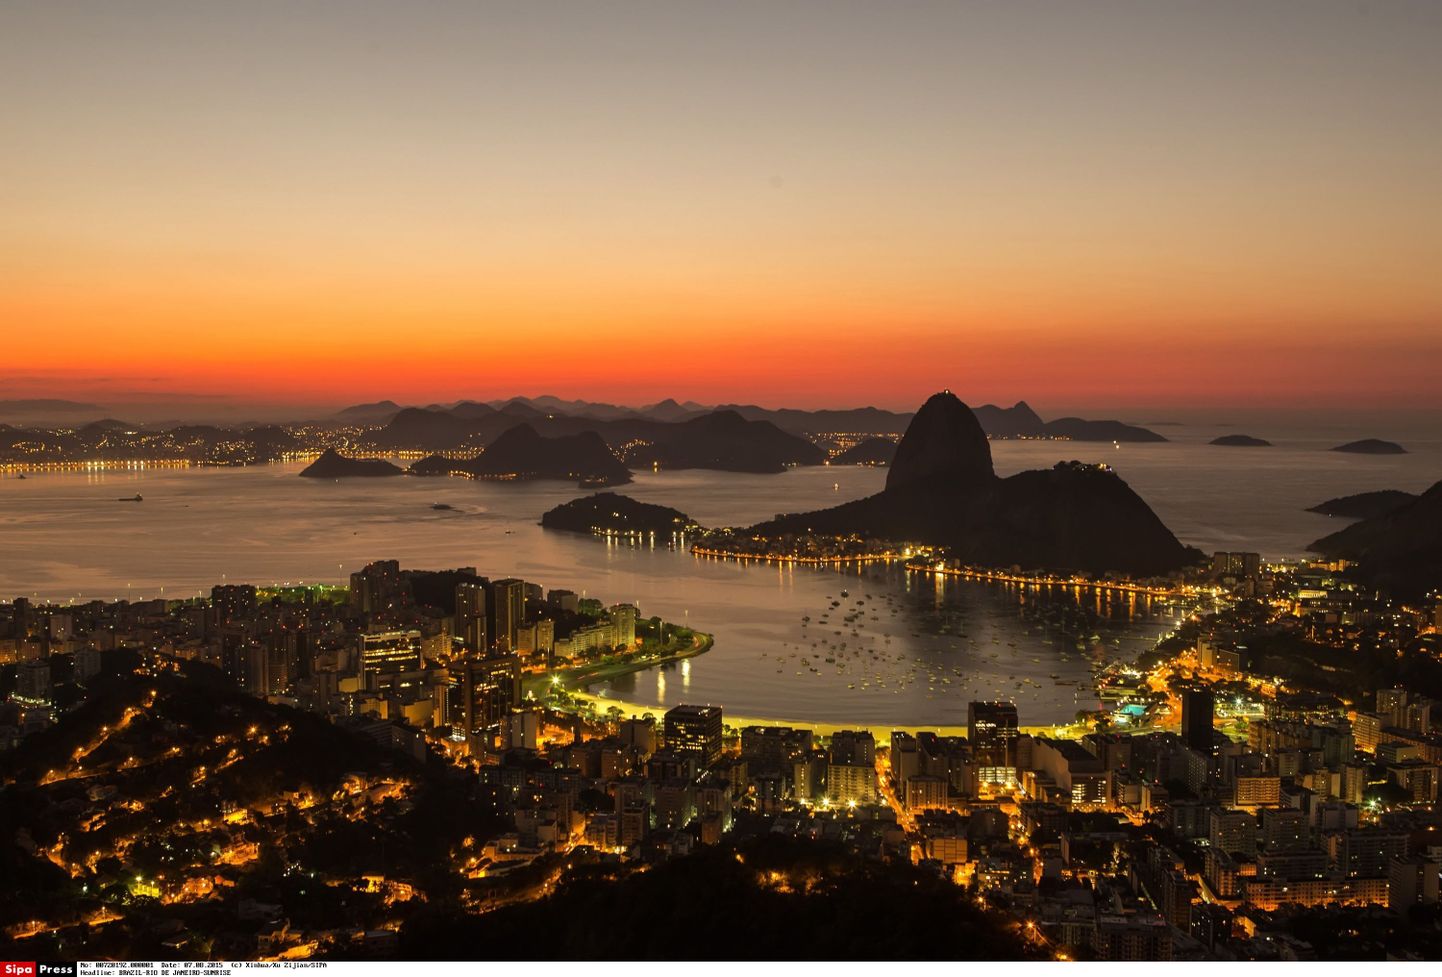 Rio de Janeiro keelab Uberi kasutamise